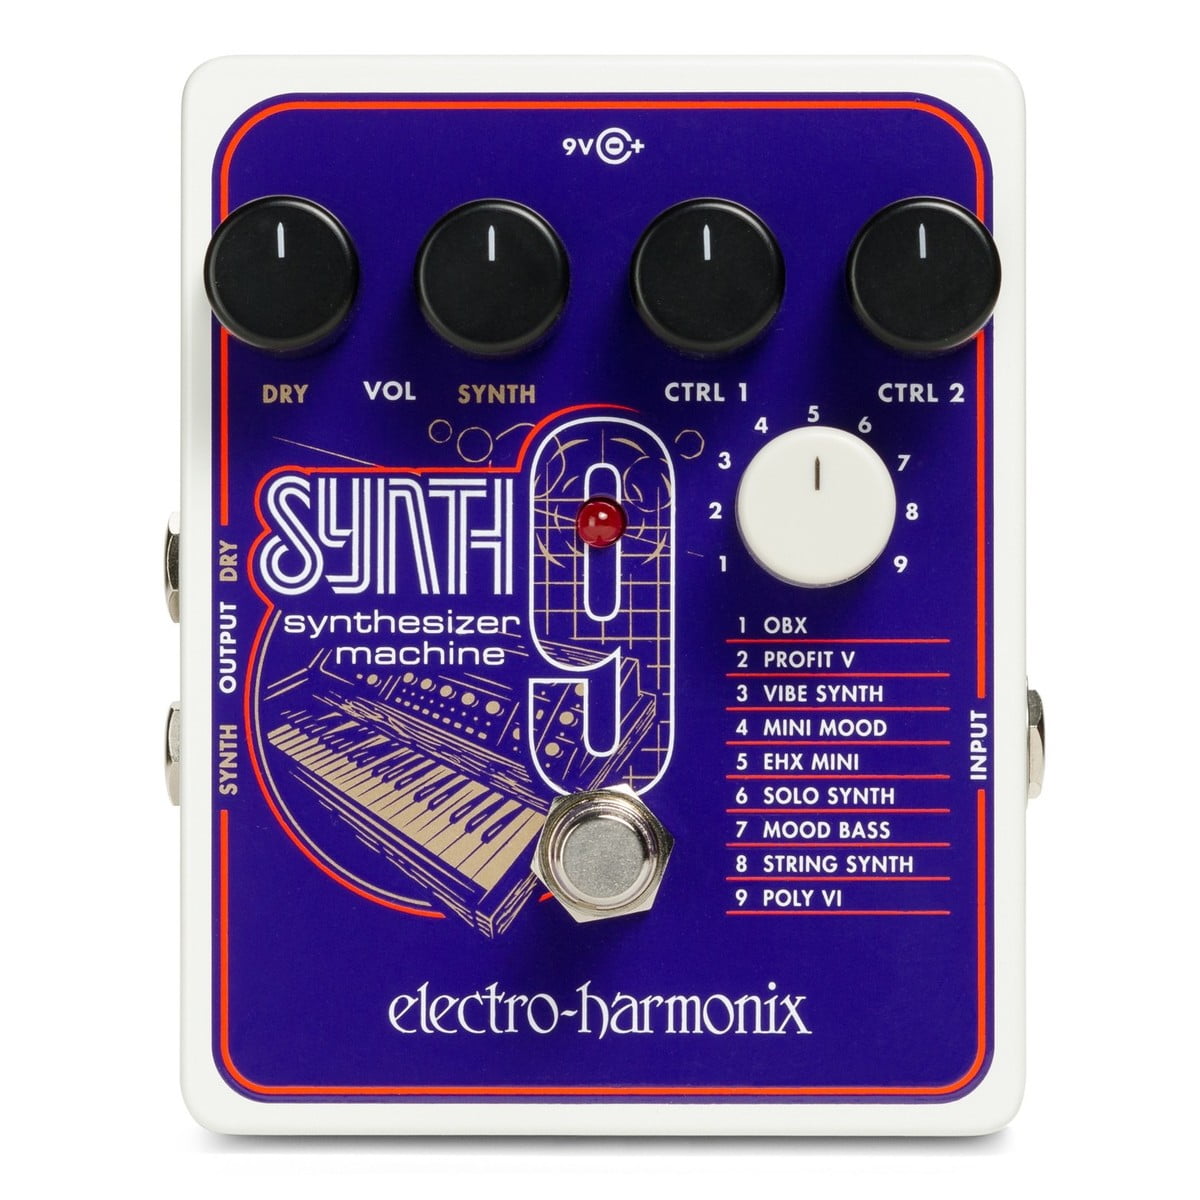 Electro Harmonix Synth 9 Synthesizer Machine - New Electro Harmonix        Synthesizer                Guitar Effect Pedal